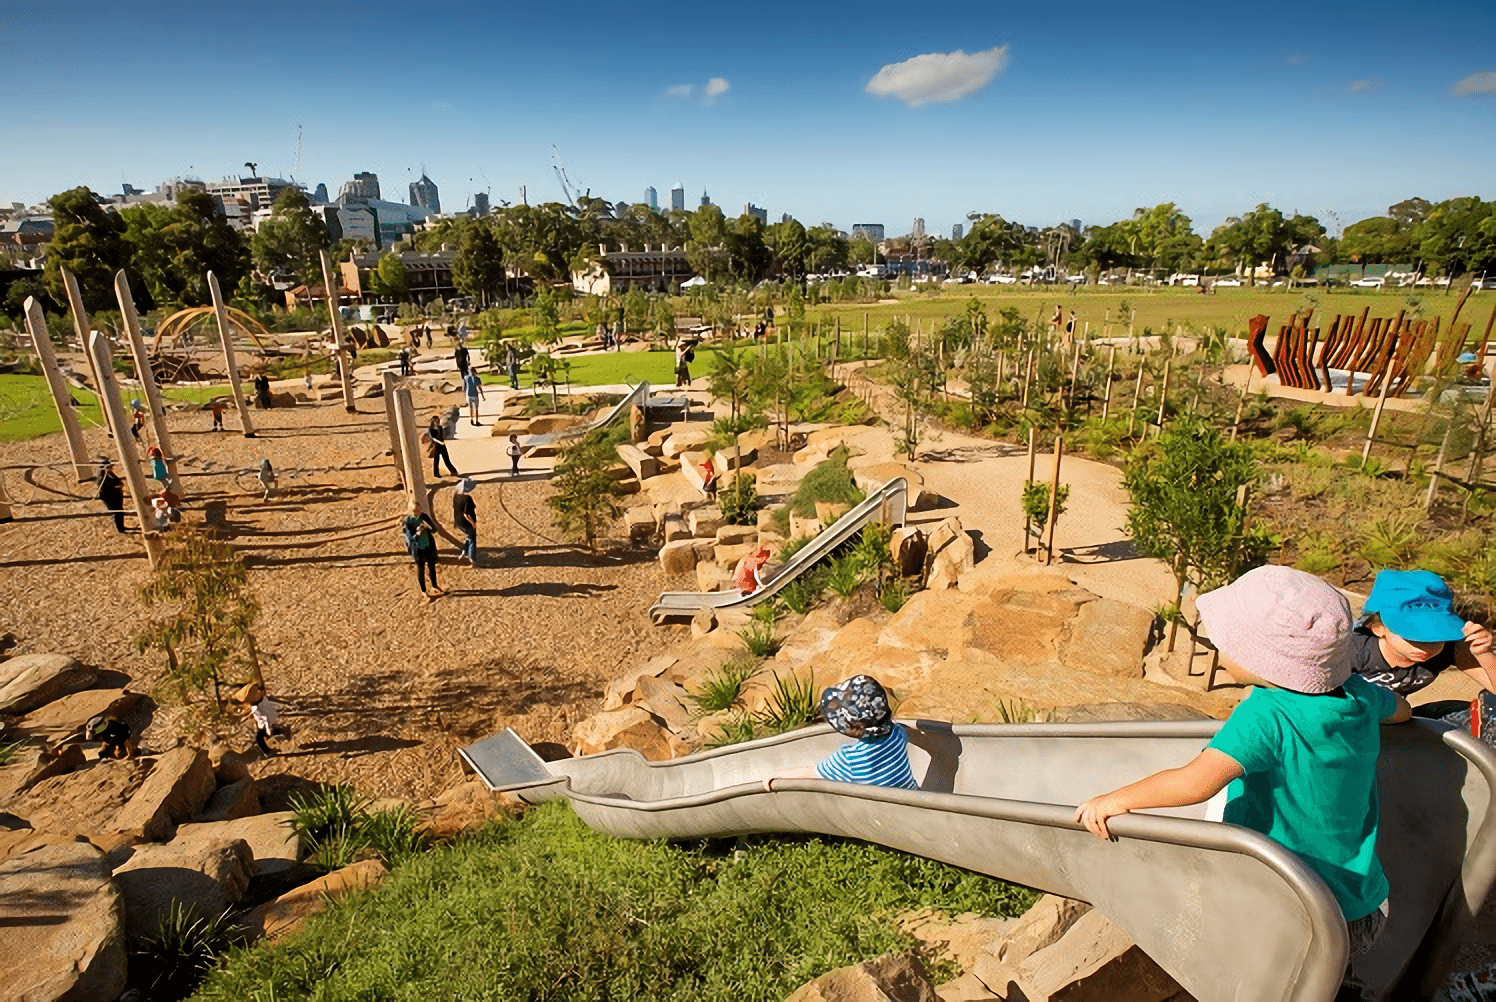 Nature play. Королевский парк в Мельбурне детская площадка. Royal Park nature Play Playground. Мельбурн, Австралия. Детские площадки в Австралии. Австралийский парк Ройял.